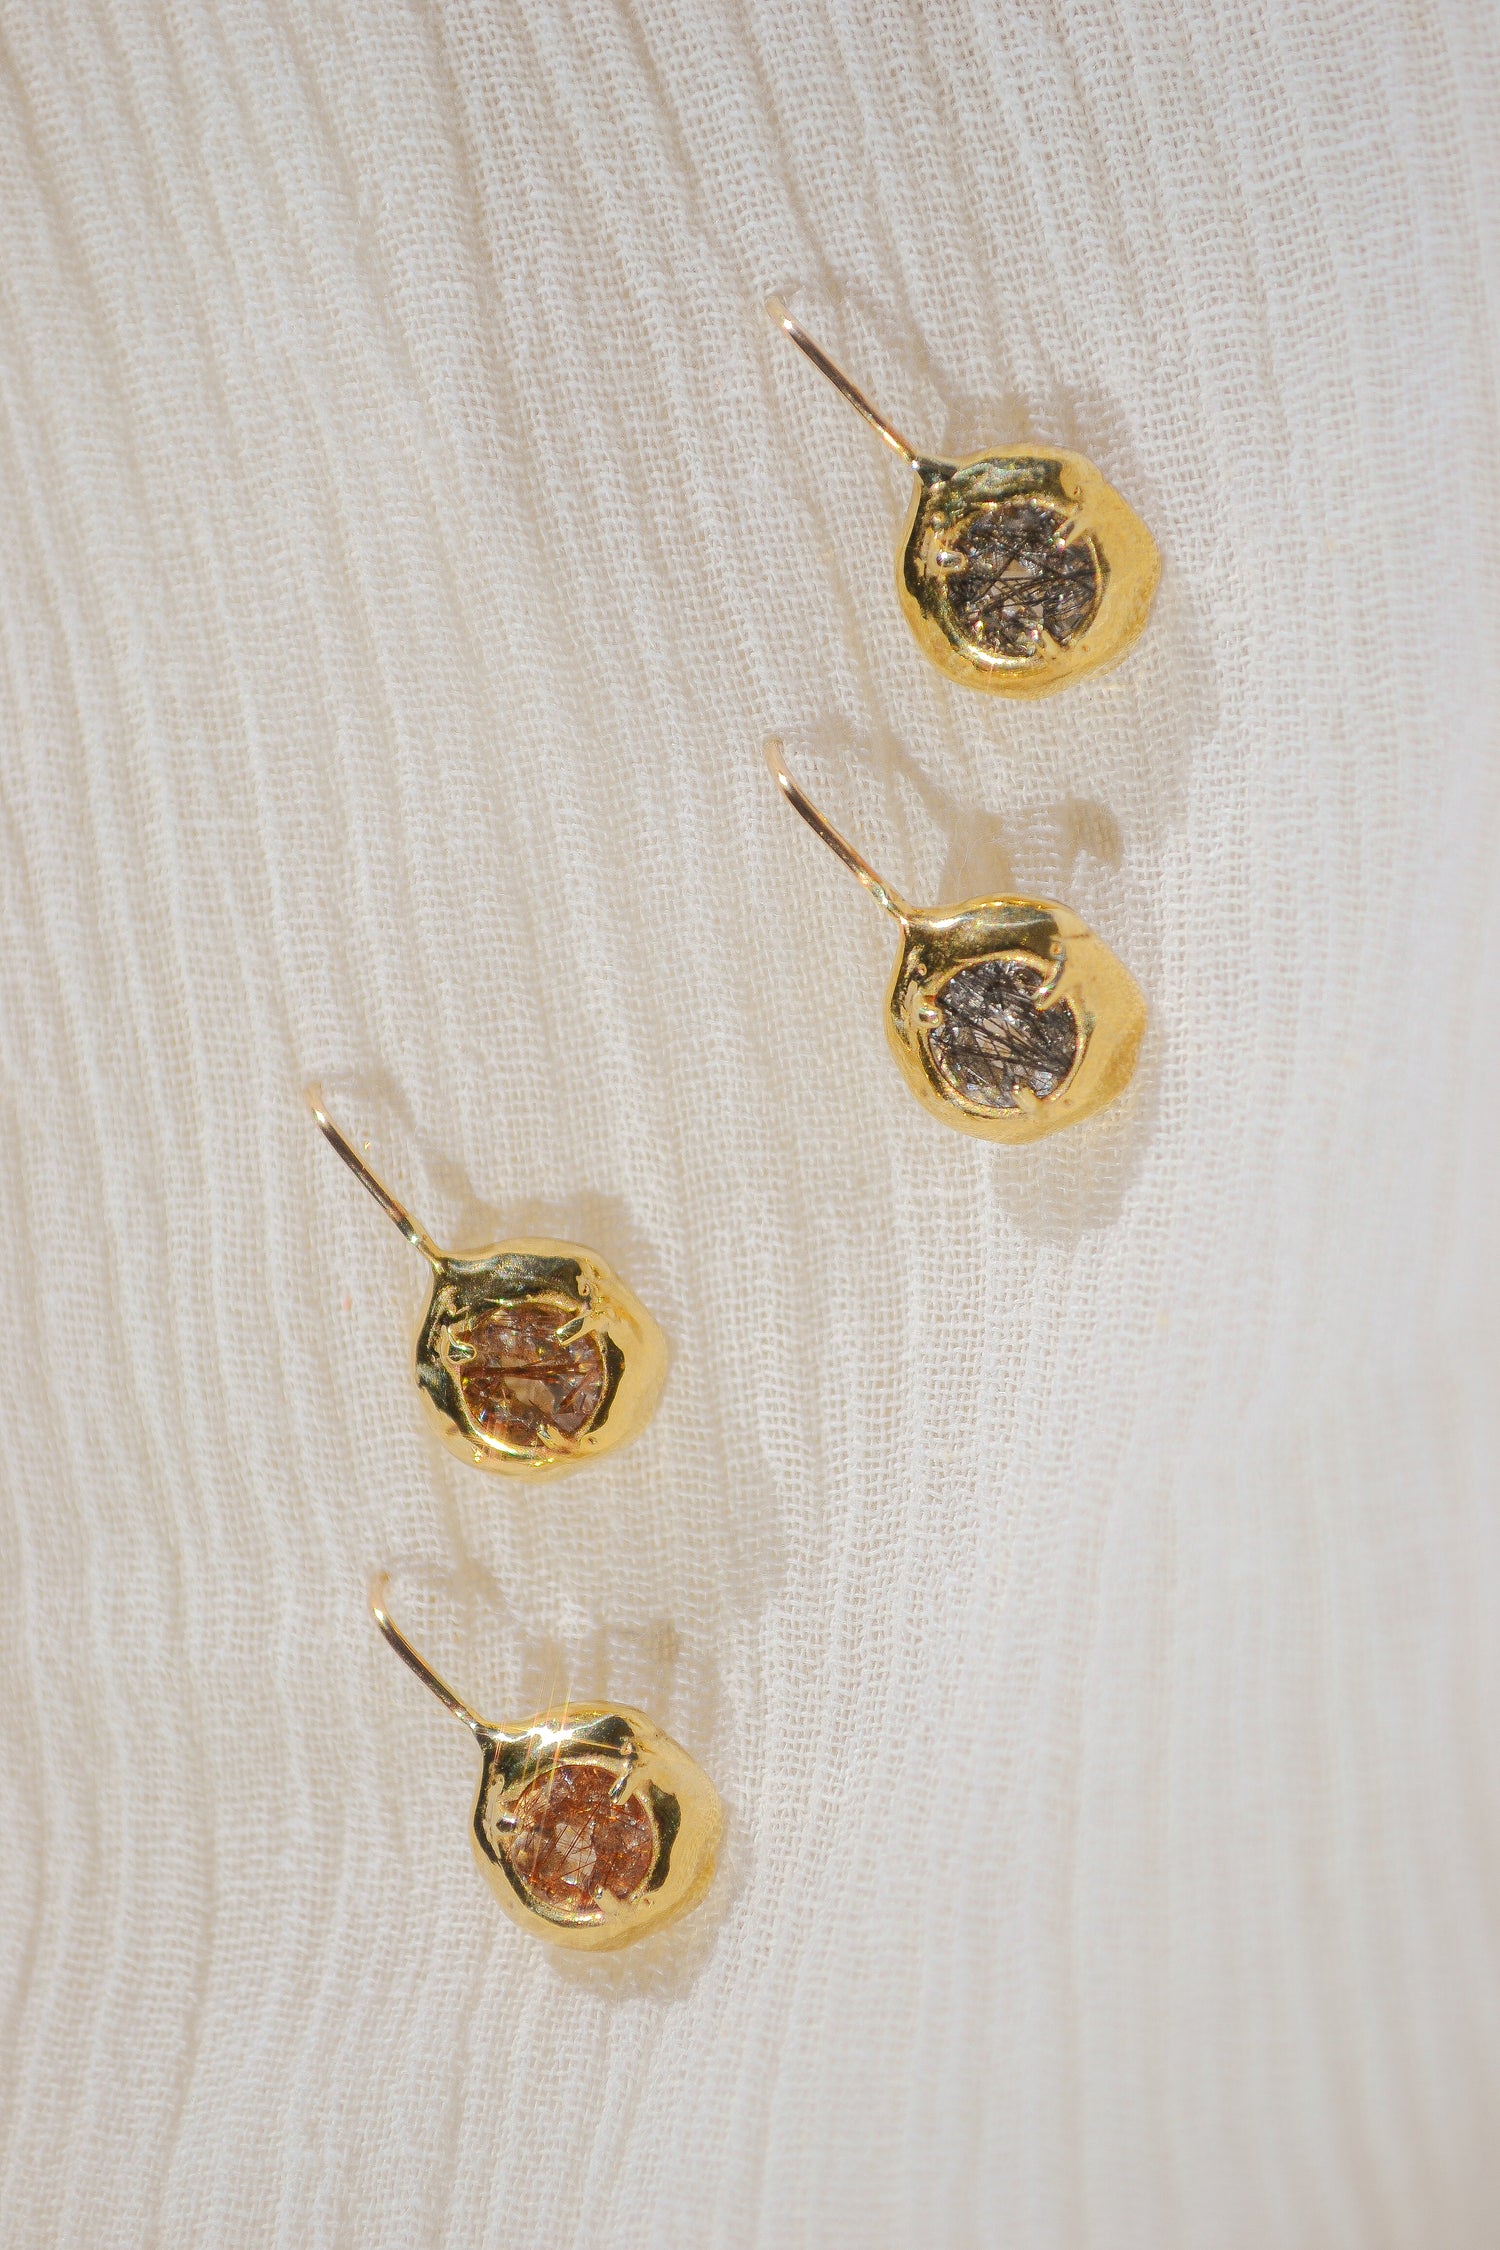 Delicate quartz pendant earrings handmade in northern California by Amanda Hunt. Keep the energy of quartz close to you.